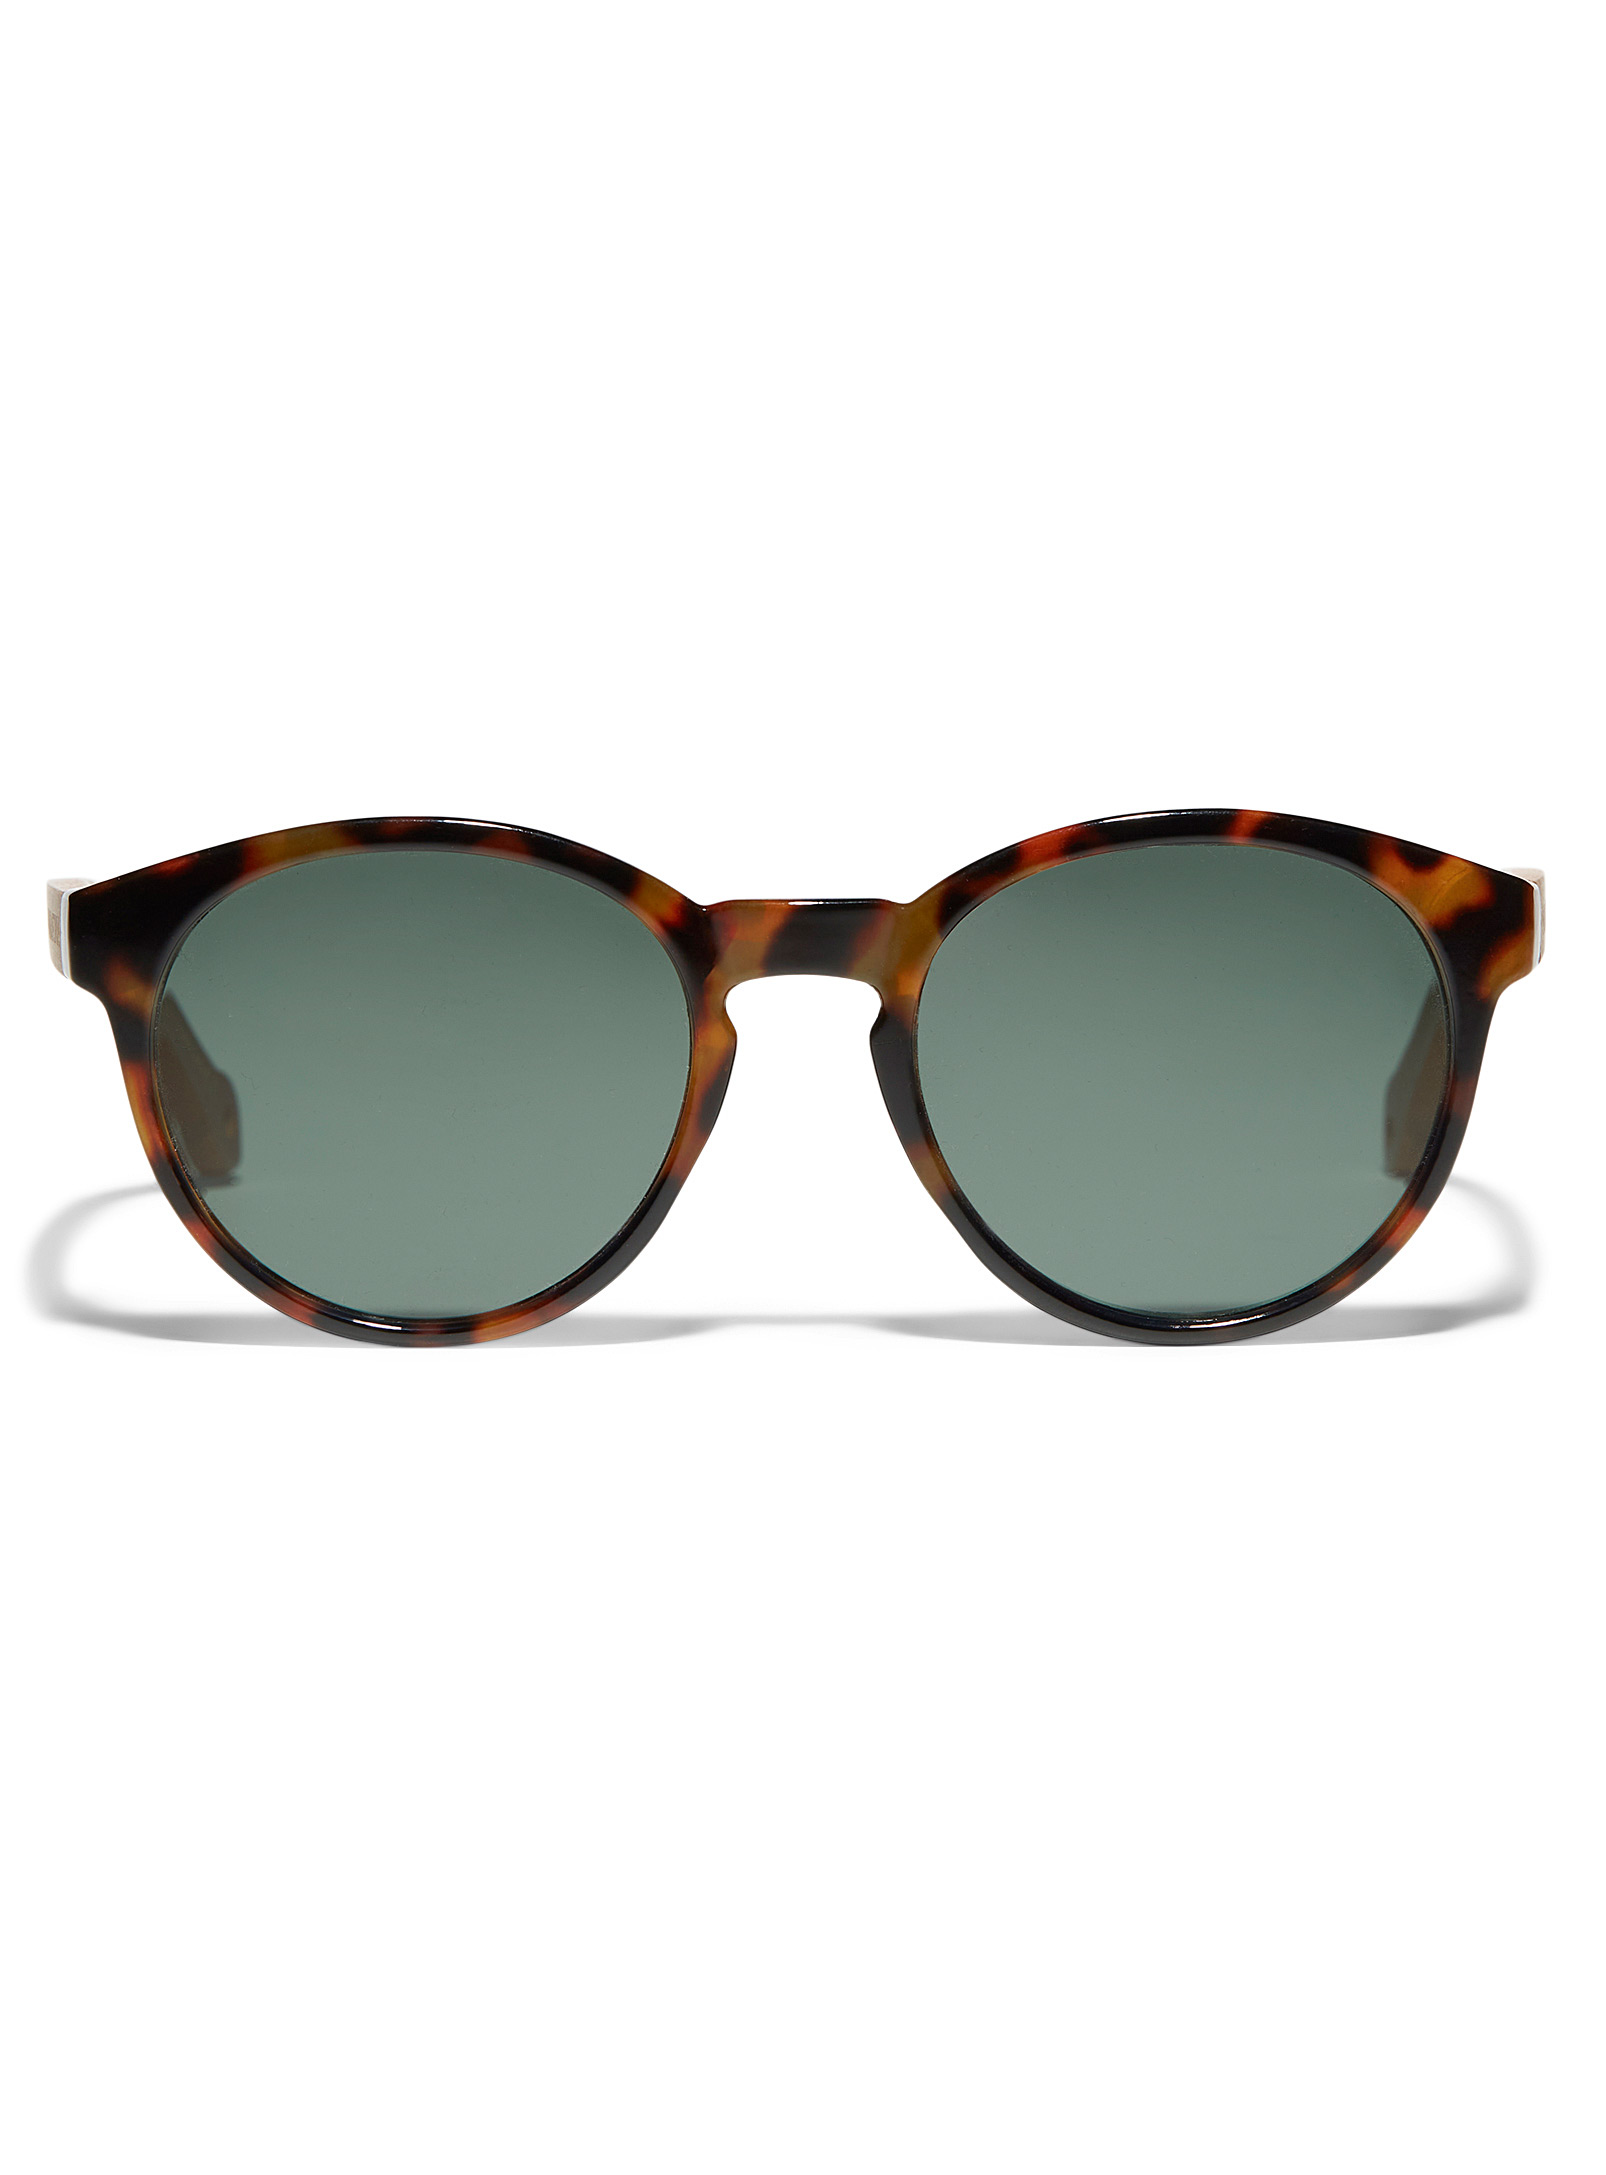 Parafina Costa Round Sunglasses In Light Brown